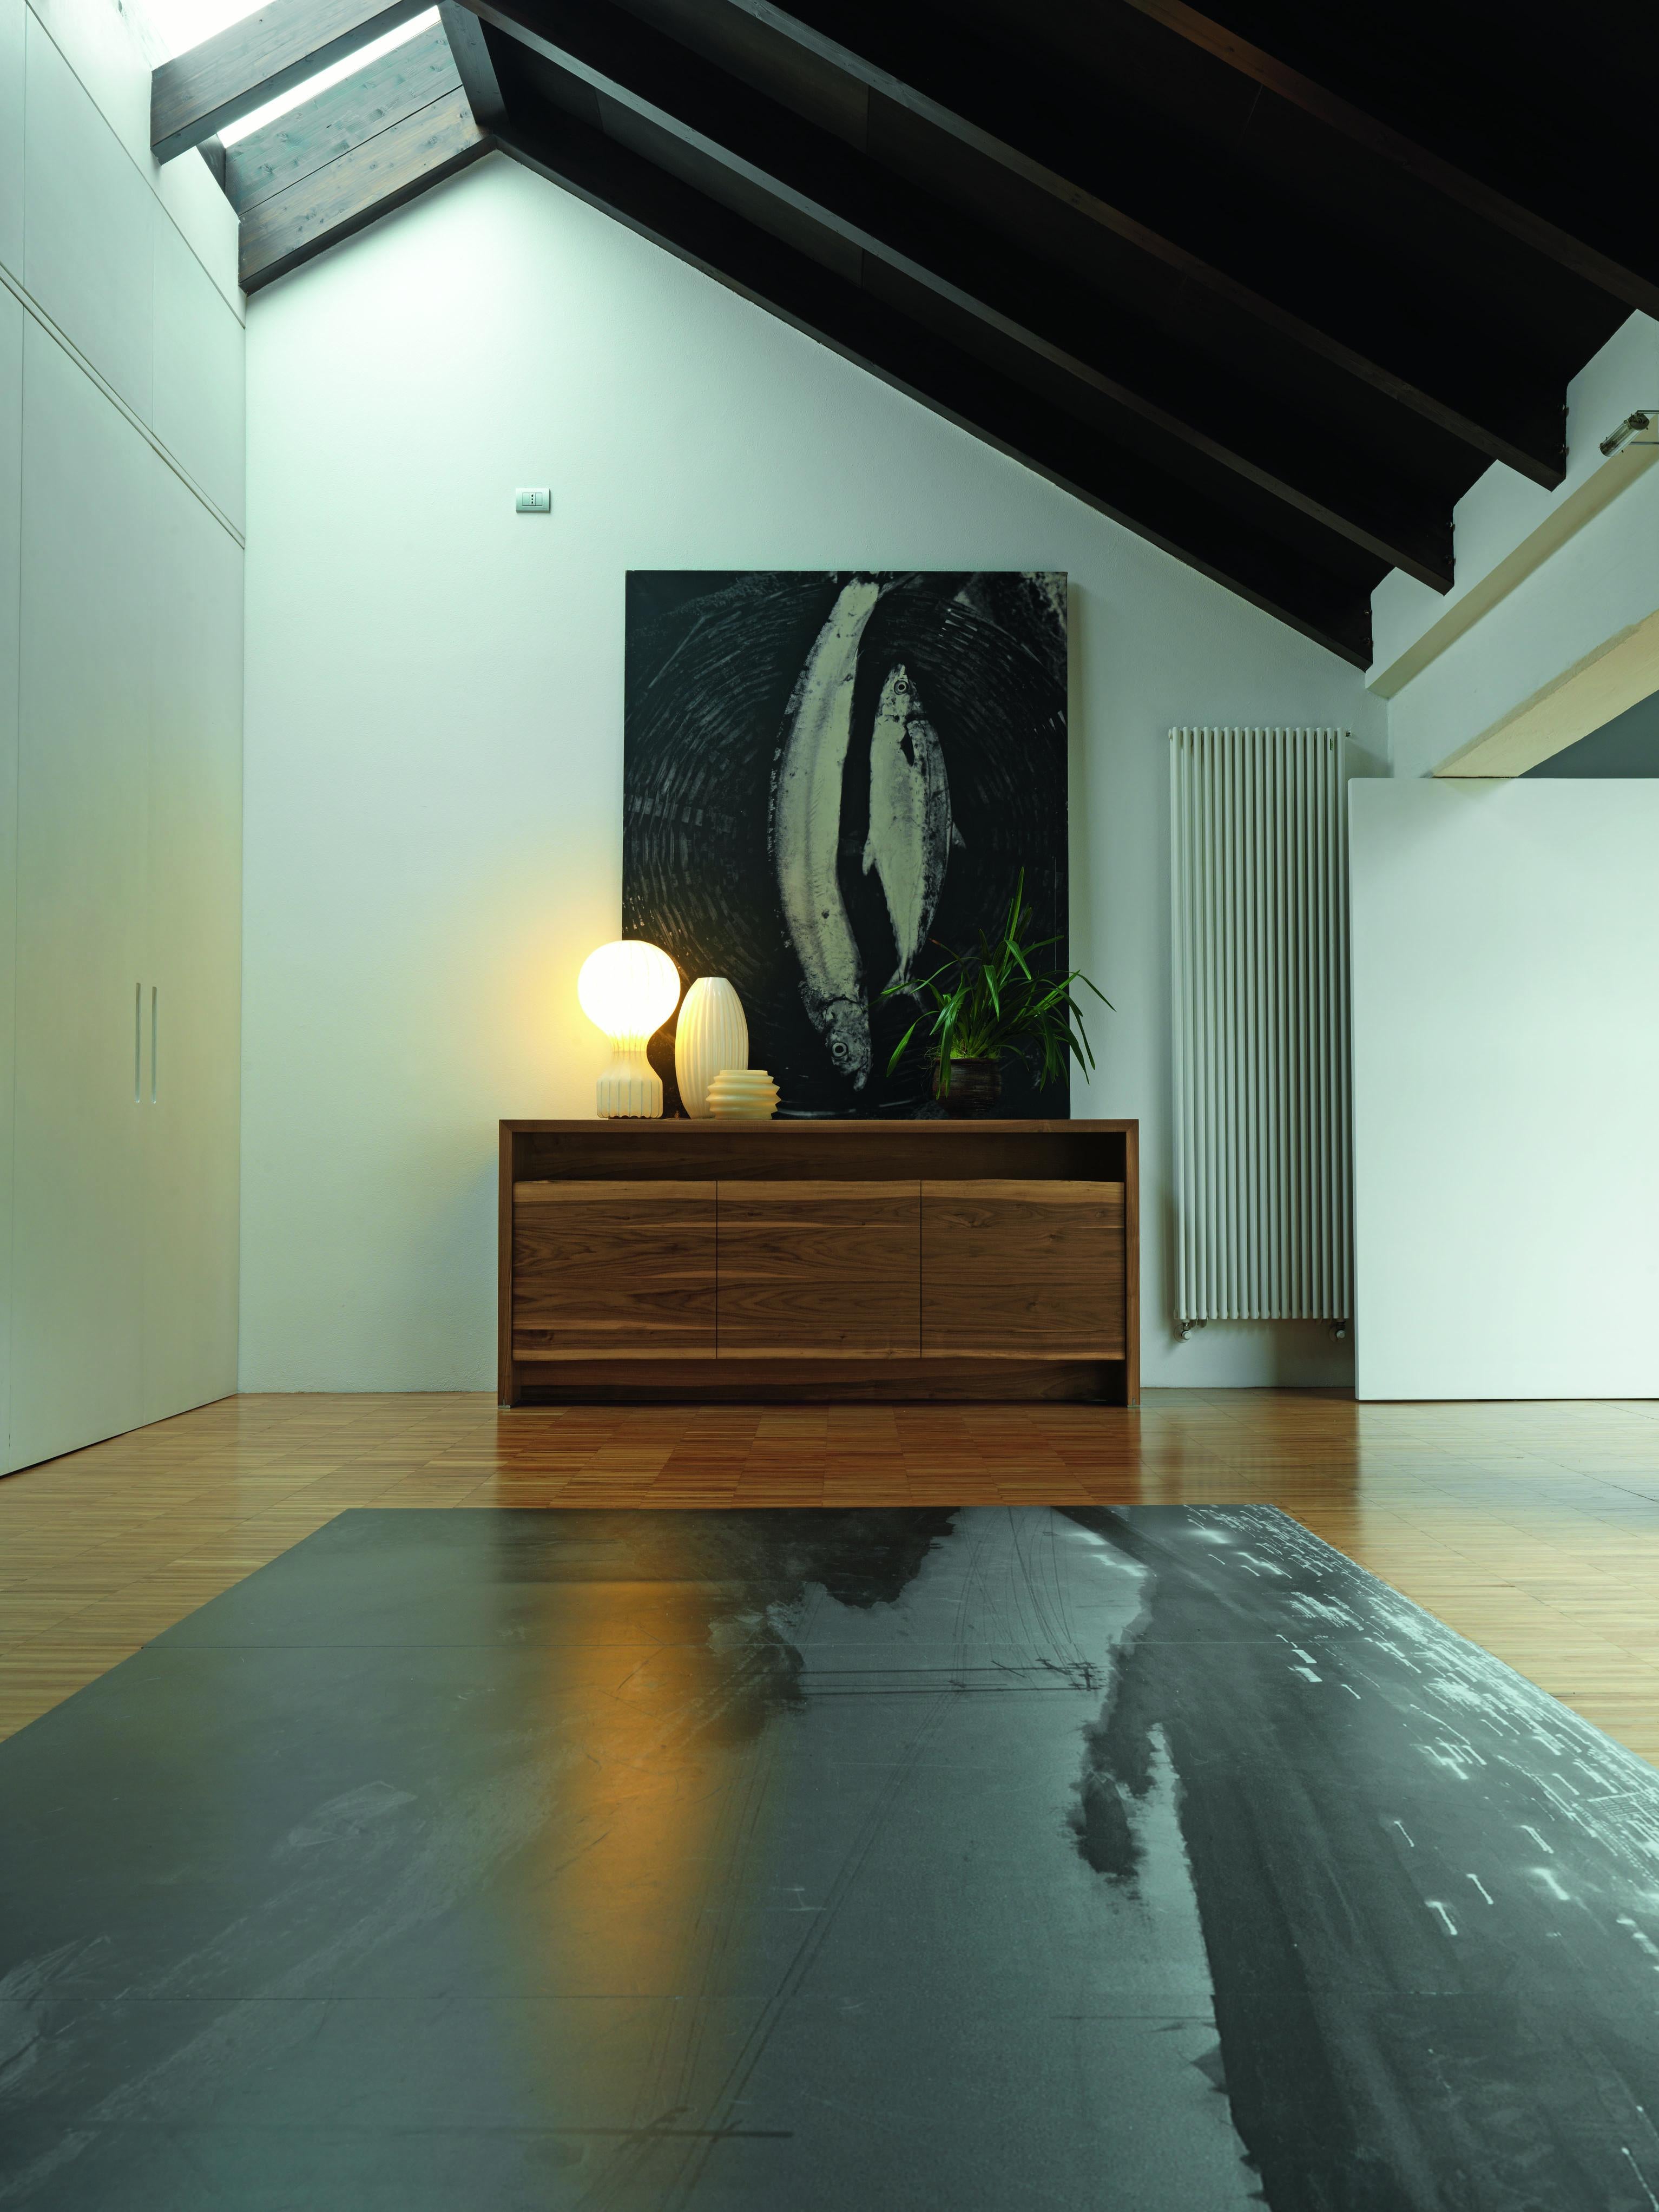 Puraforma Solid Wood Sideborad, Walnut Natural Finish, Contemporary In New Condition For Sale In Cadeglioppi de Oppeano, VR